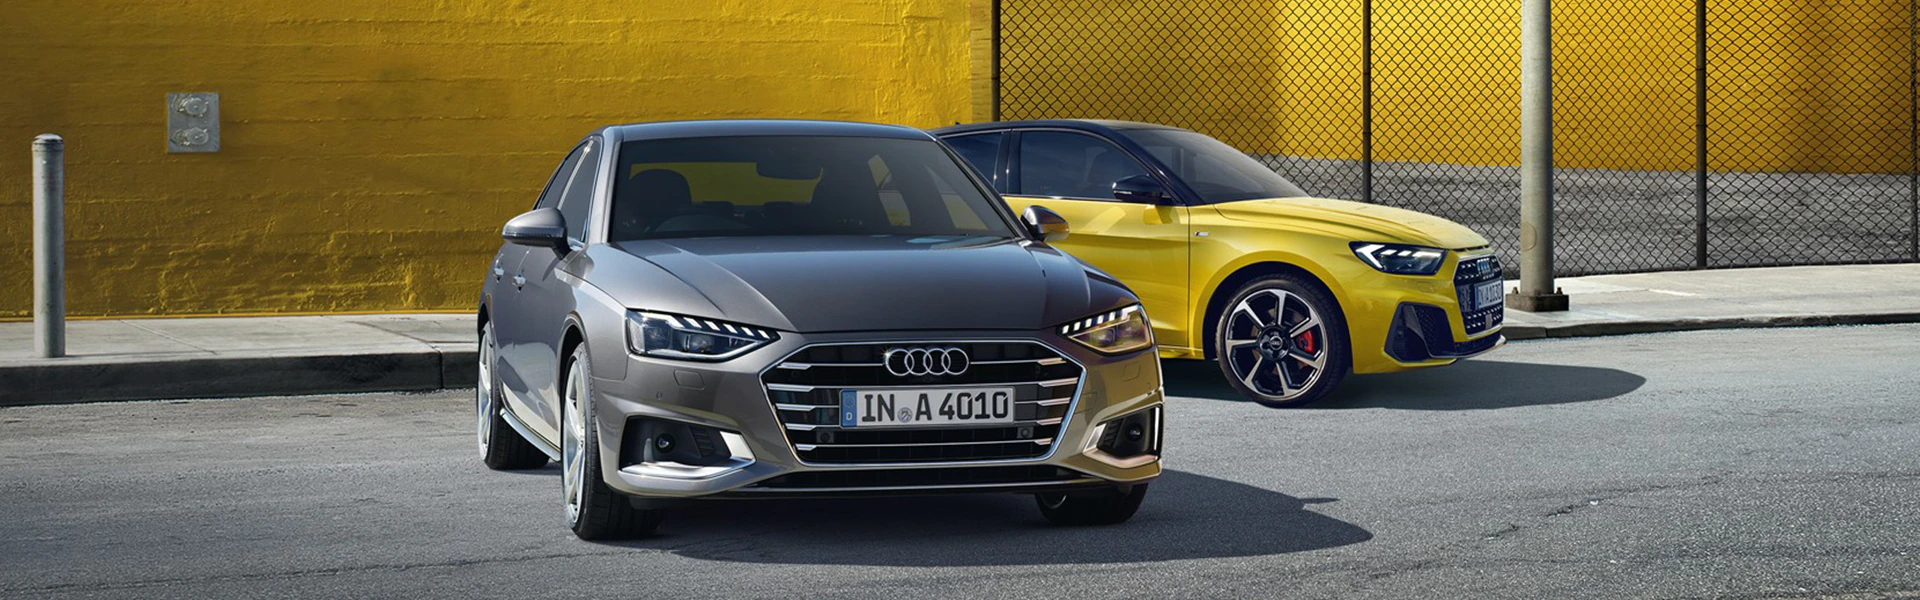 Audi Finance offer Get $0 deposit, 50,000 kilometre allowance on Audi A1-A8 models